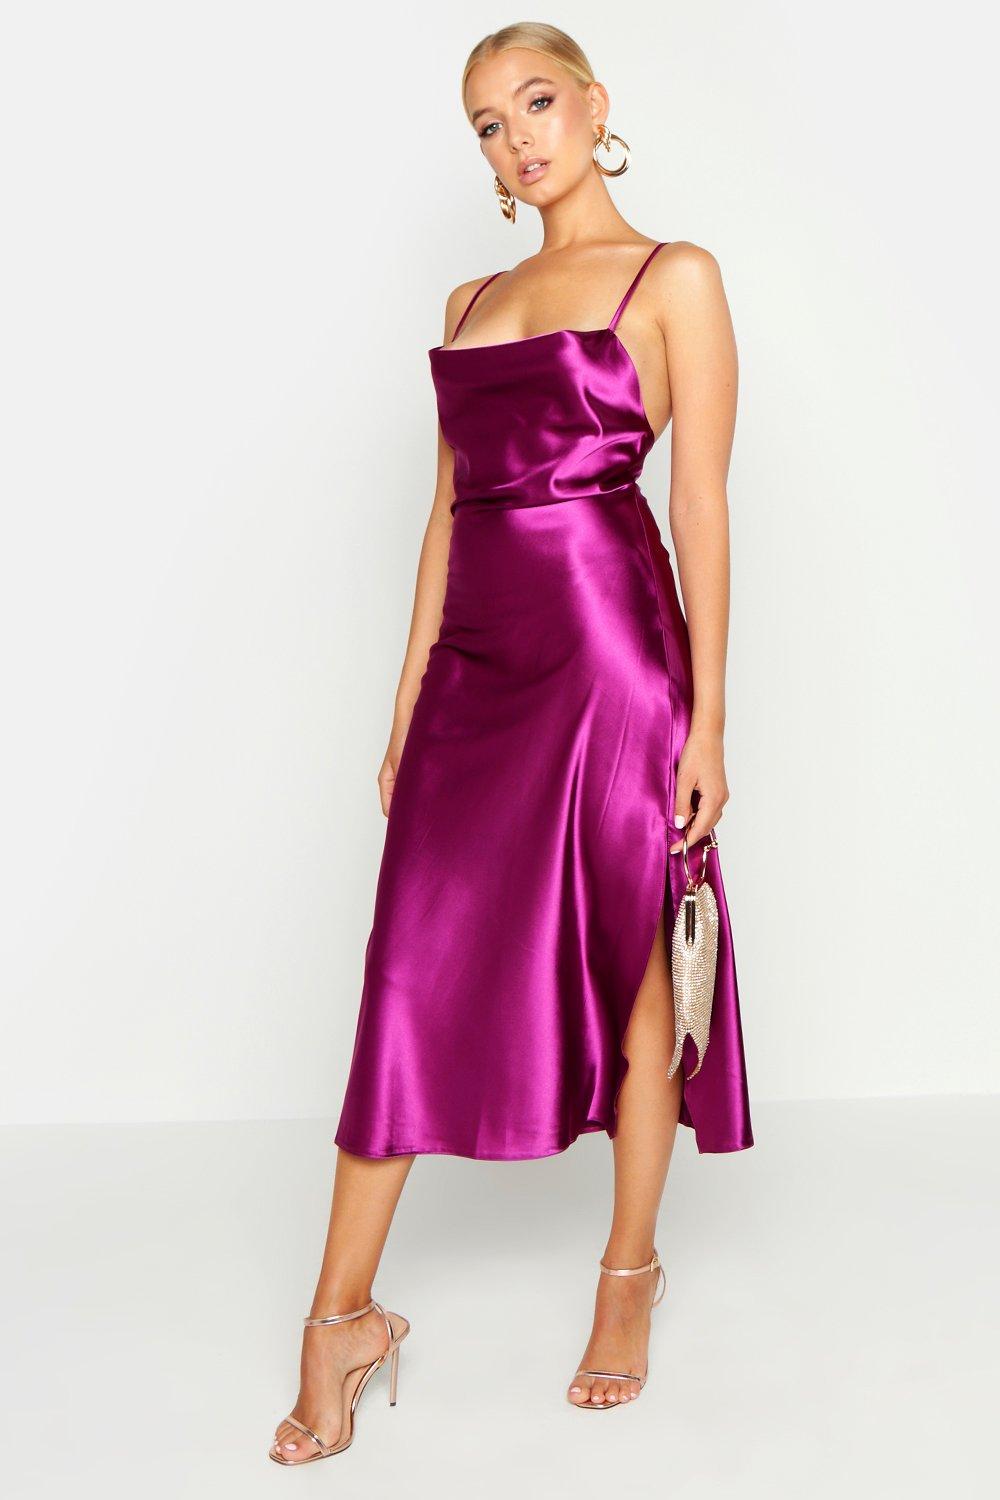 purple satin dress long